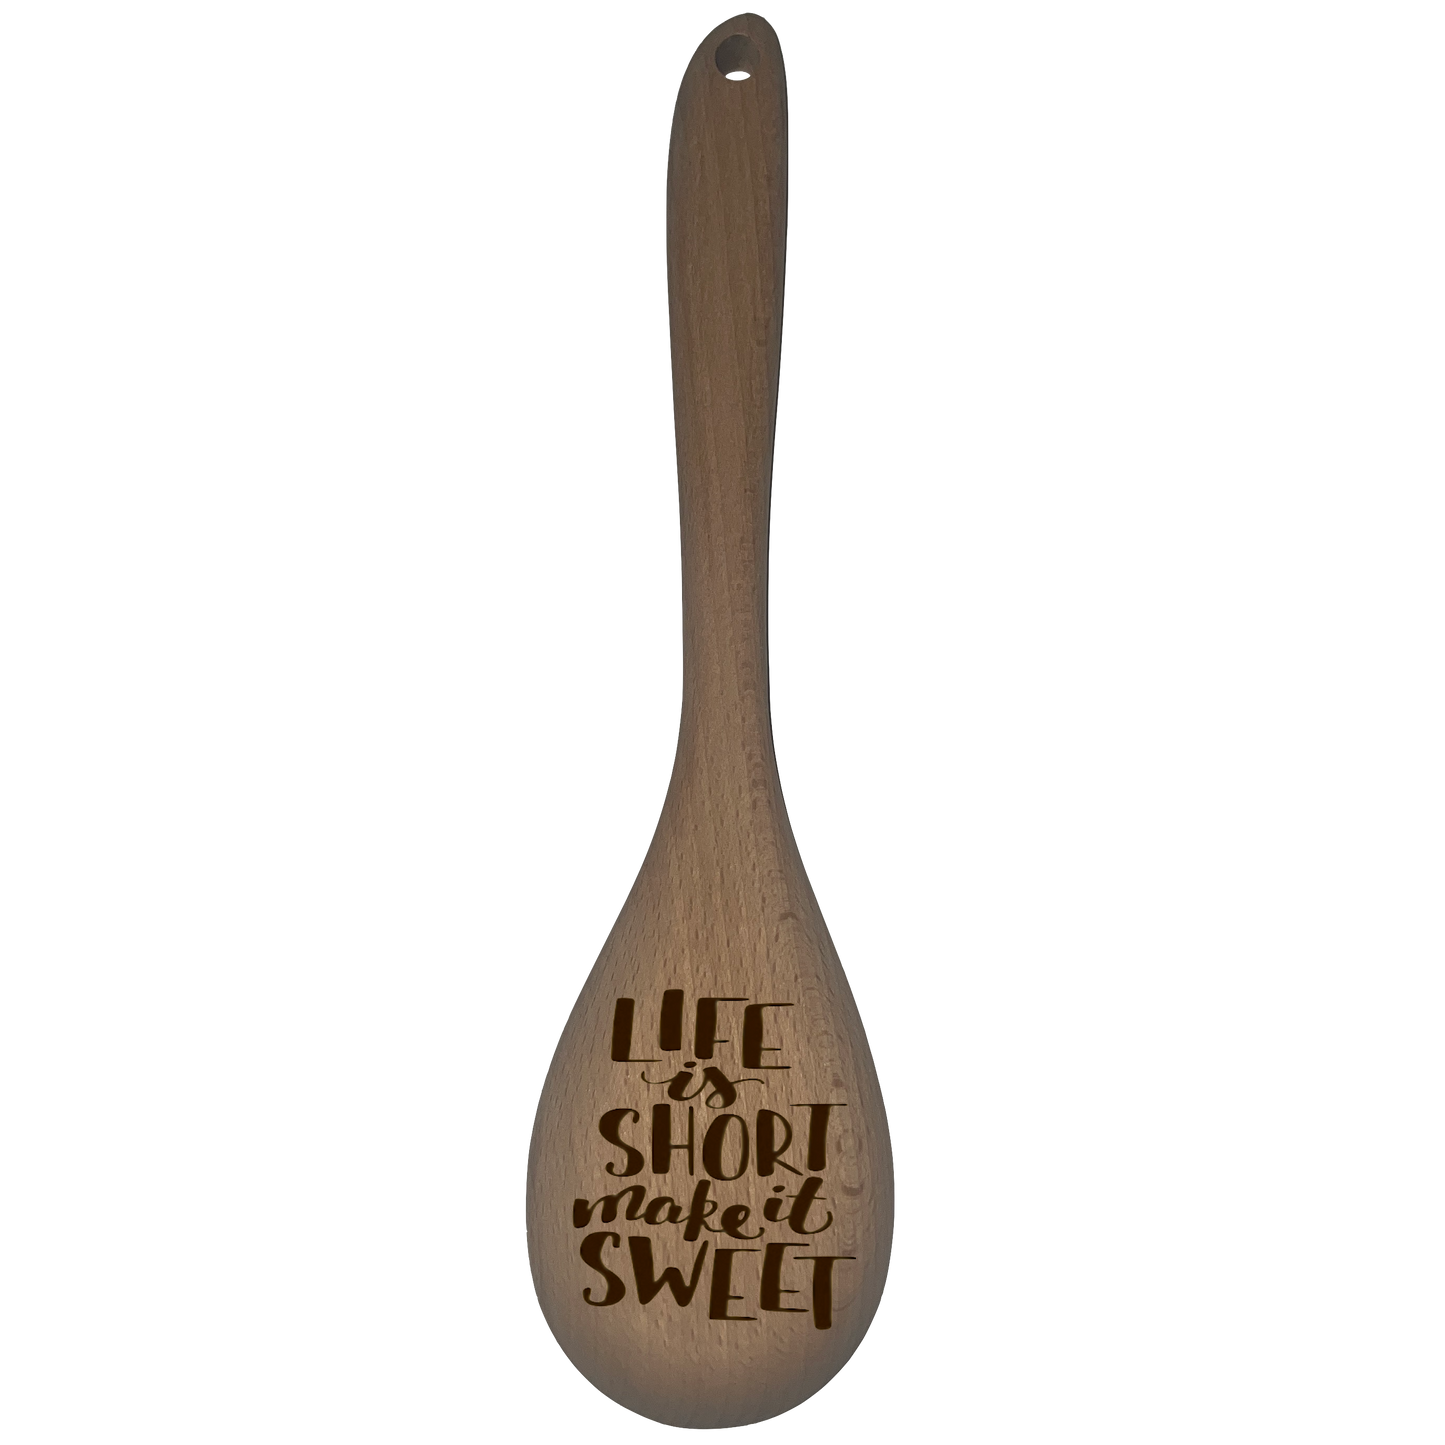 Life is Short Make it Sweet - Spoon